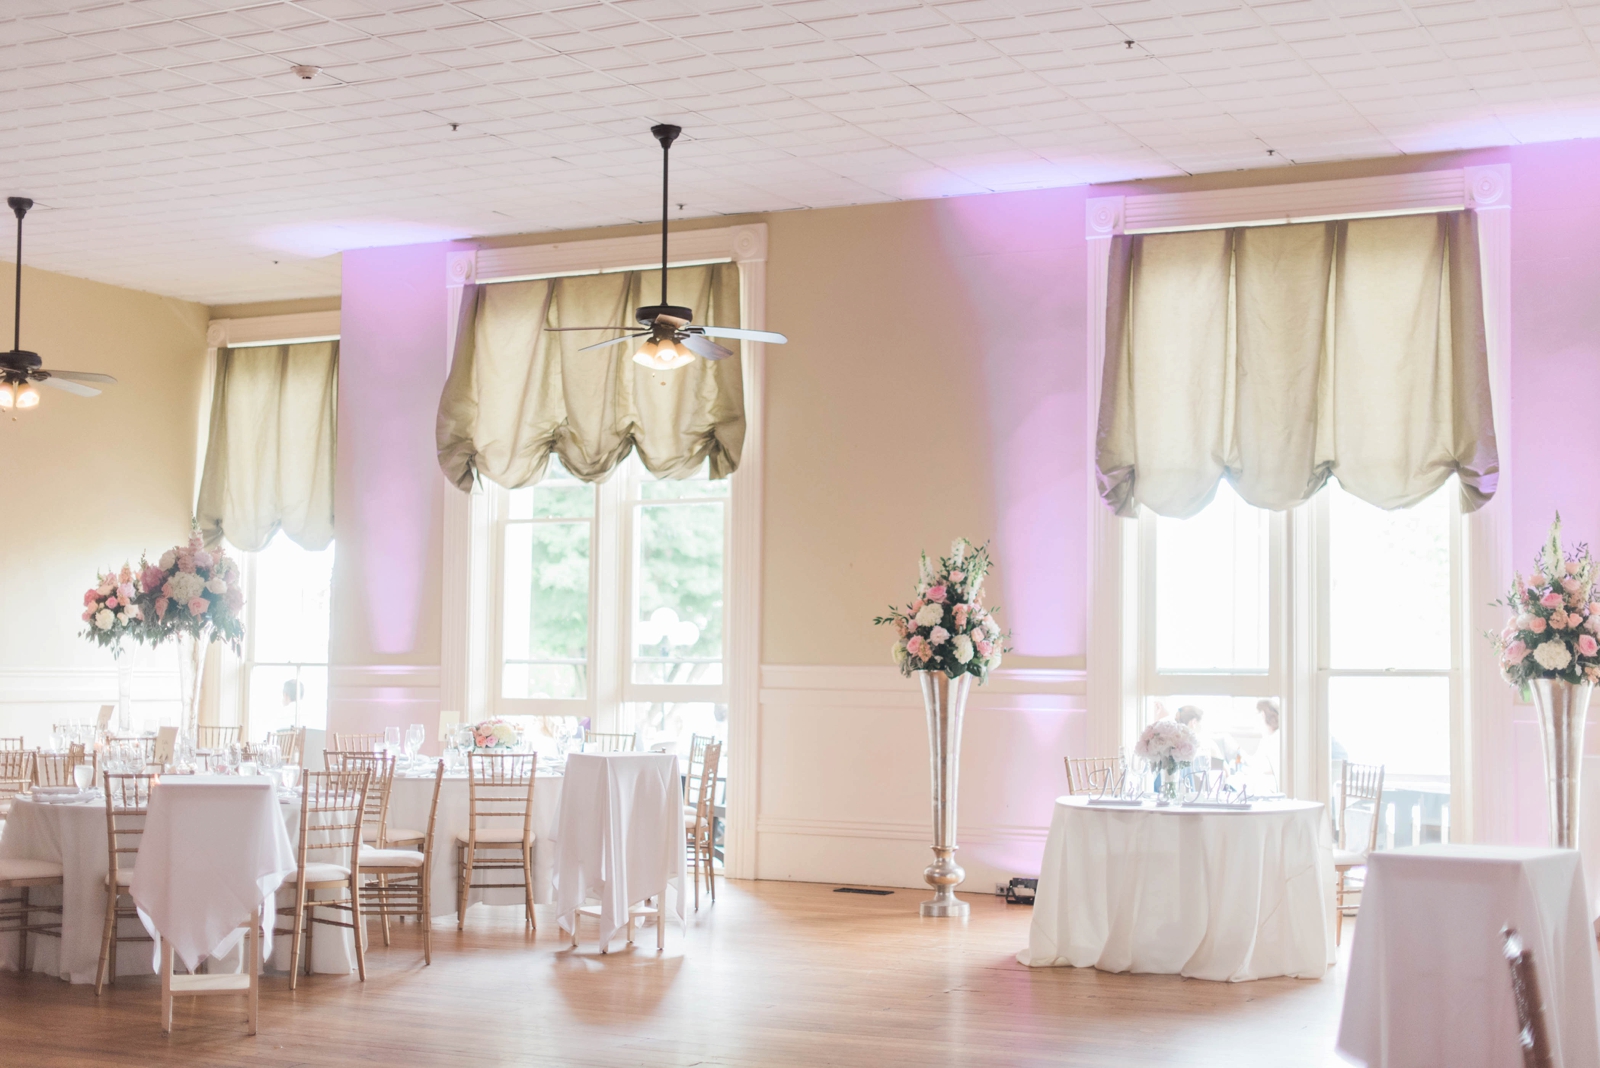 Chatauqua Lake Athenaeum Hotel Wedding reception room decor details gold chiavari chairs